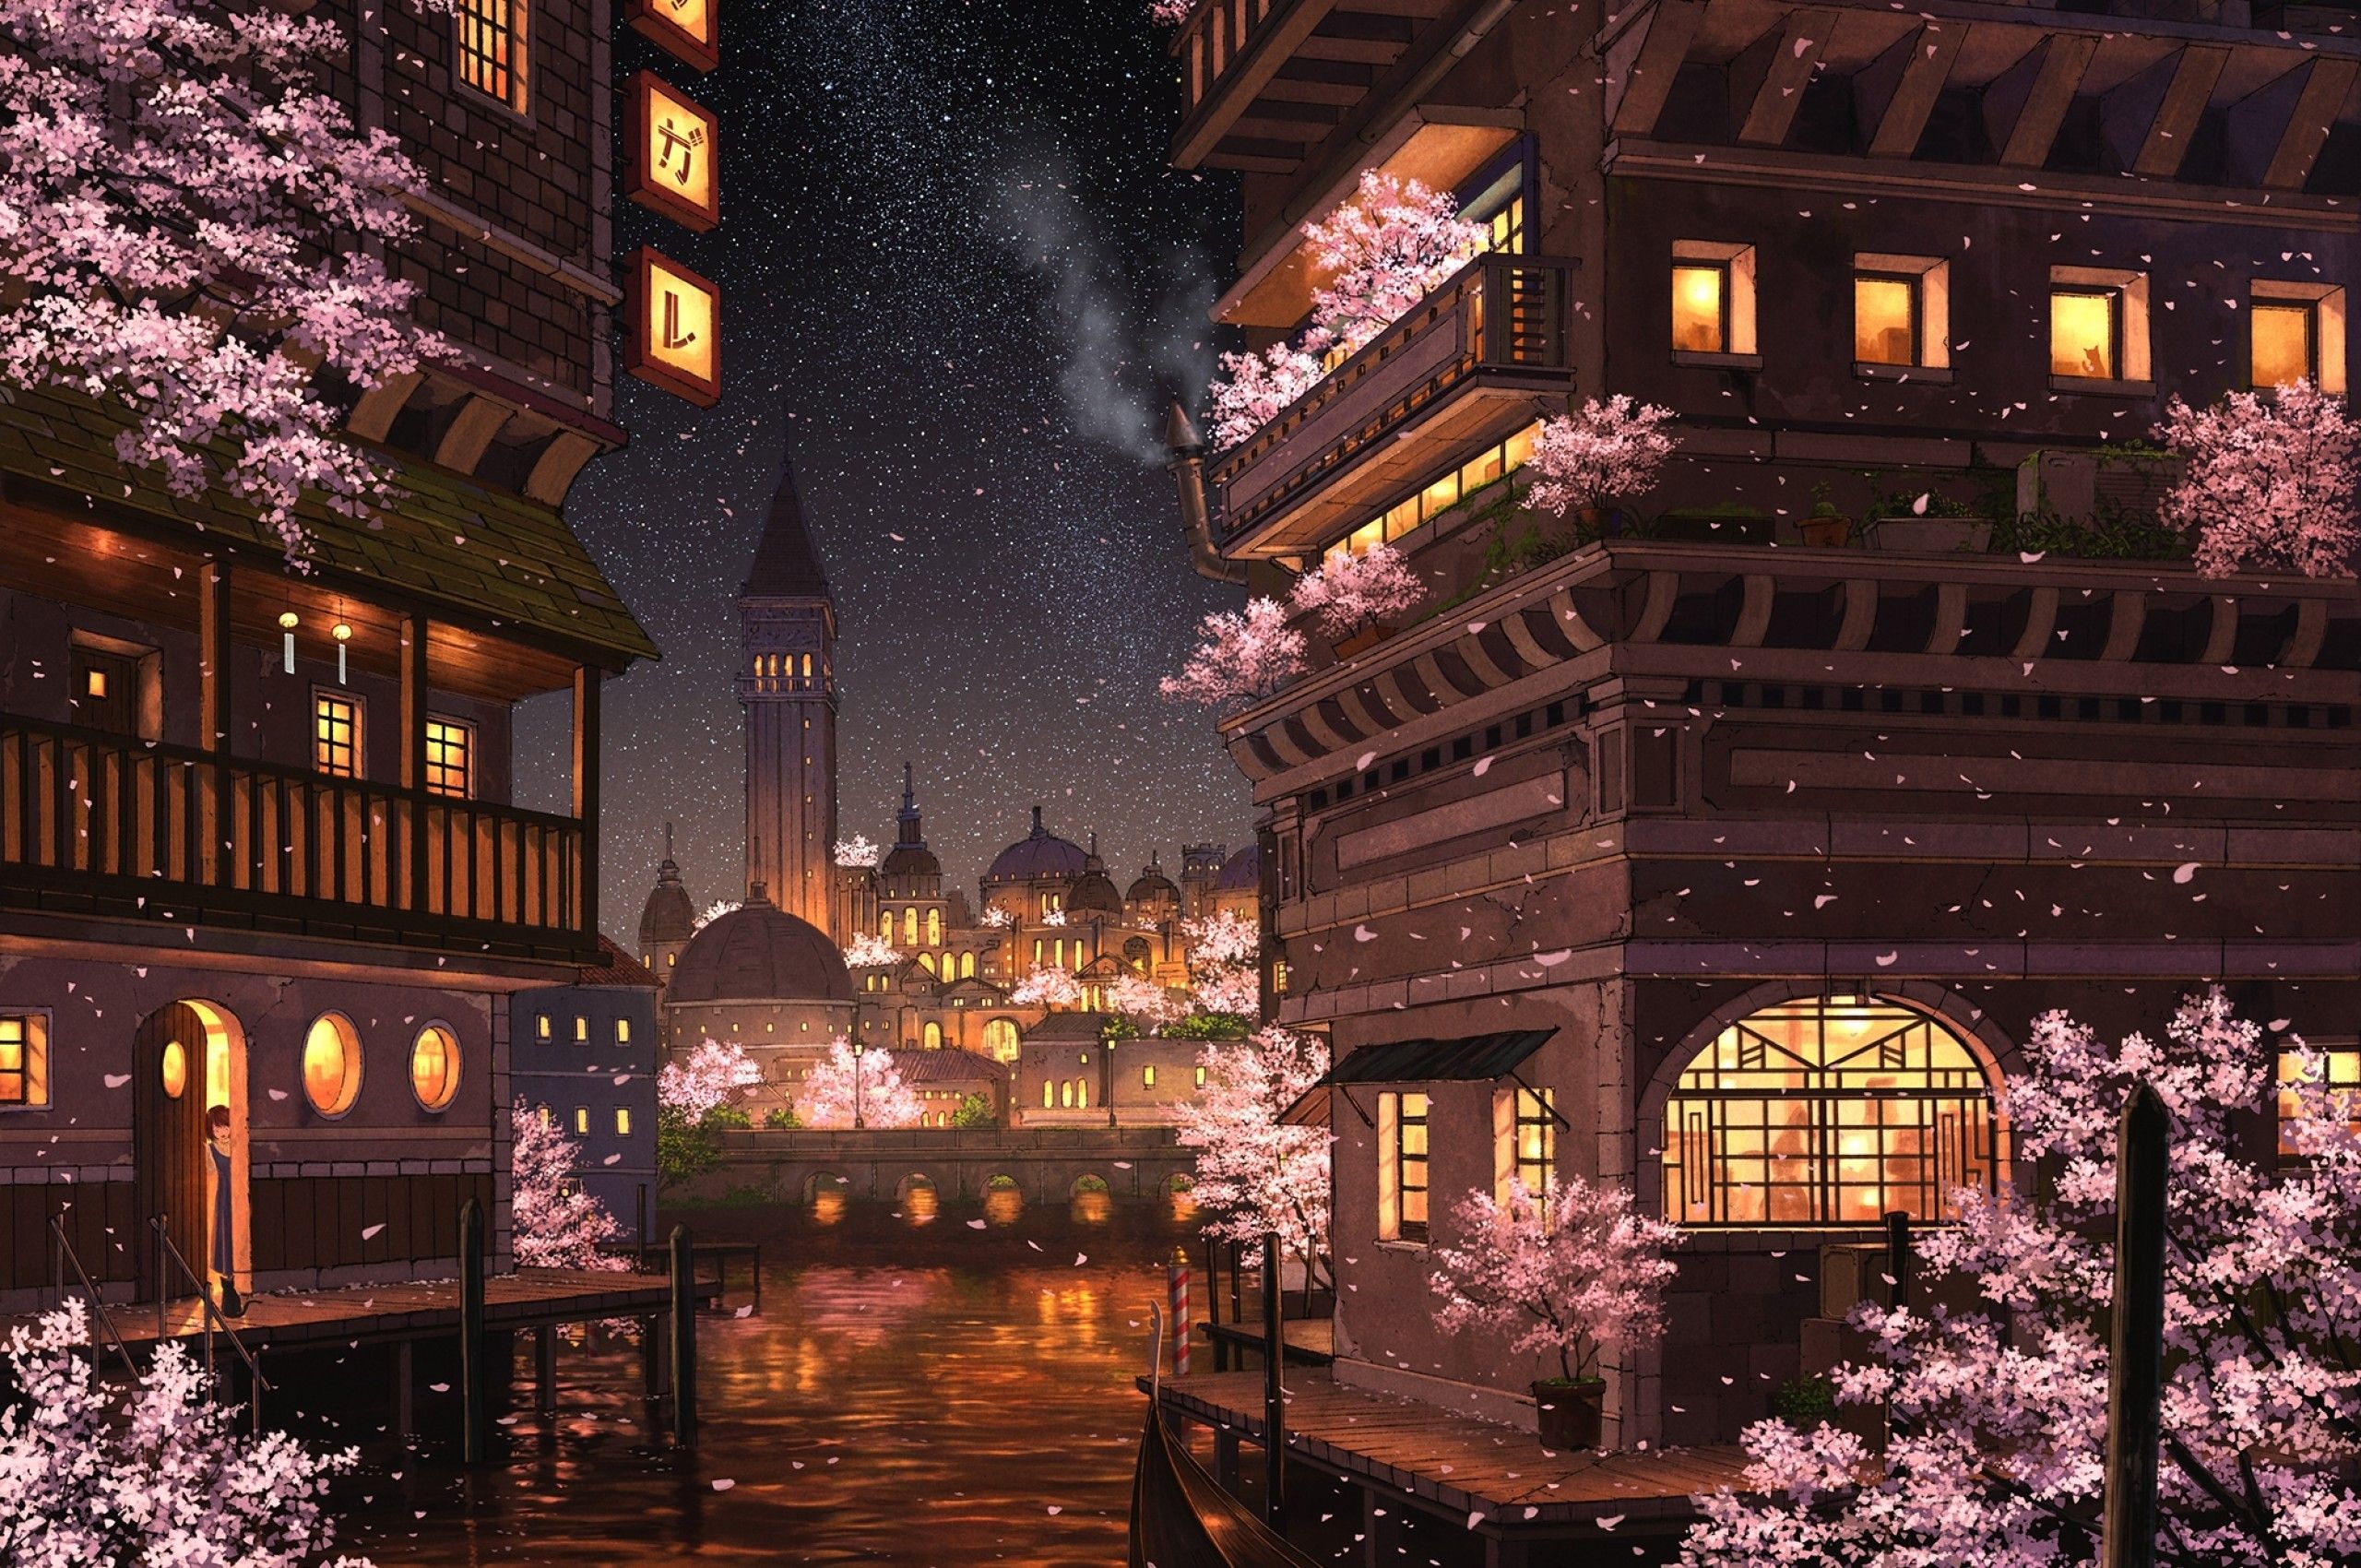 Download 2560x1700 Anime City, Sakura Blossom, Night, Buildings, Lights, Stars, River Wallpaper for Chromebook Pixel